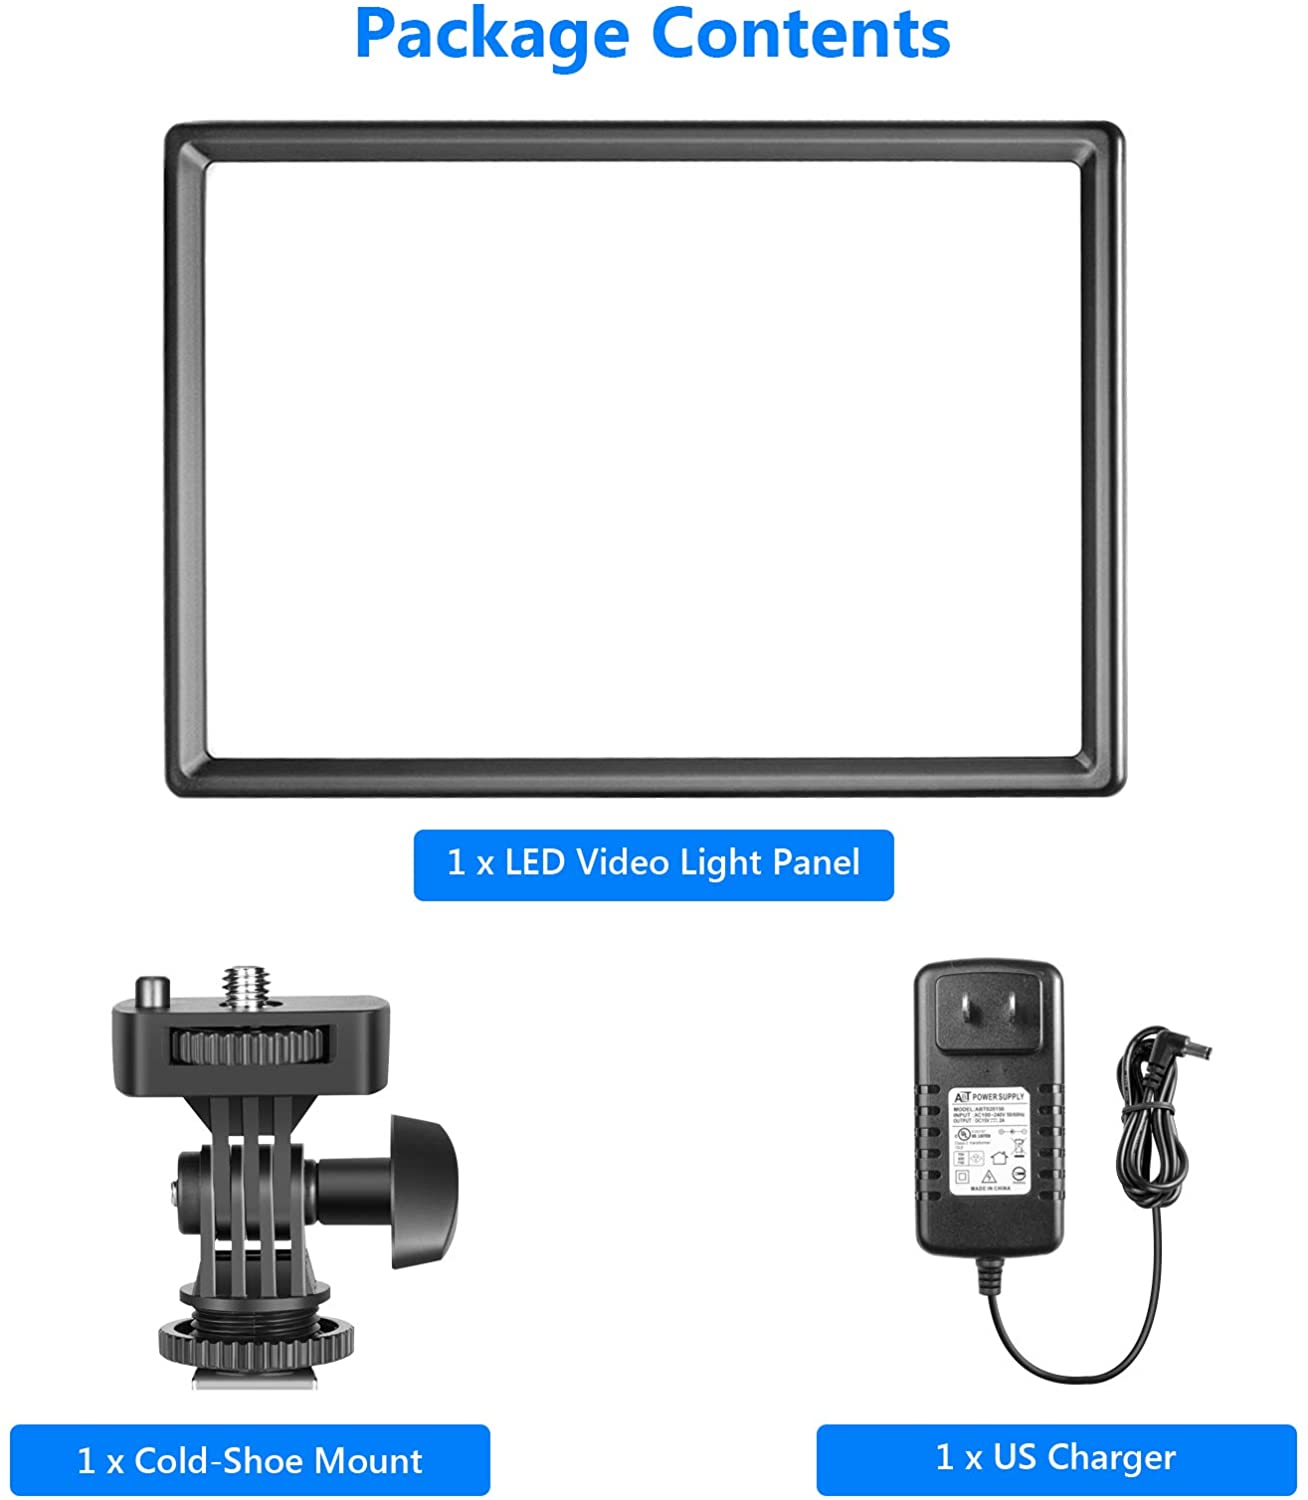 NEEWER Nl660 LED Video Light Instruction Manual